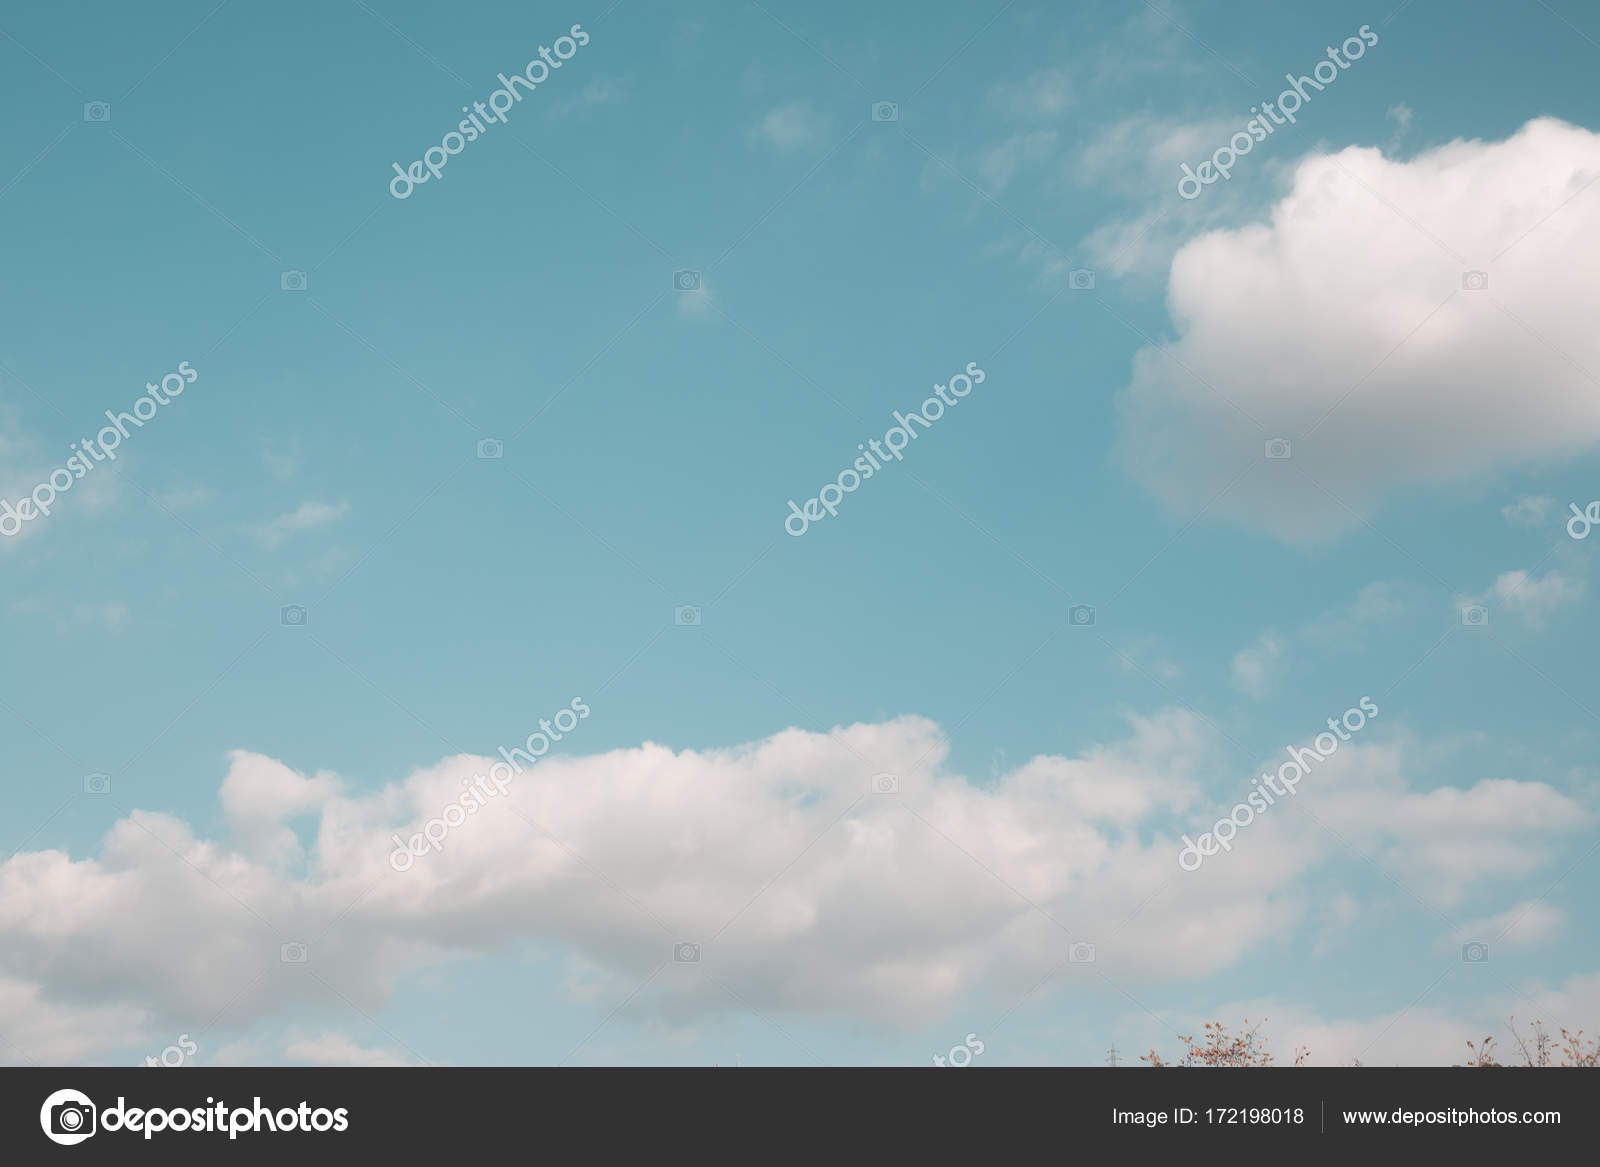 Blue Sky Overlay Background Texture Overlay Blue Sky Stock Photo C Fabio Sozza Photography